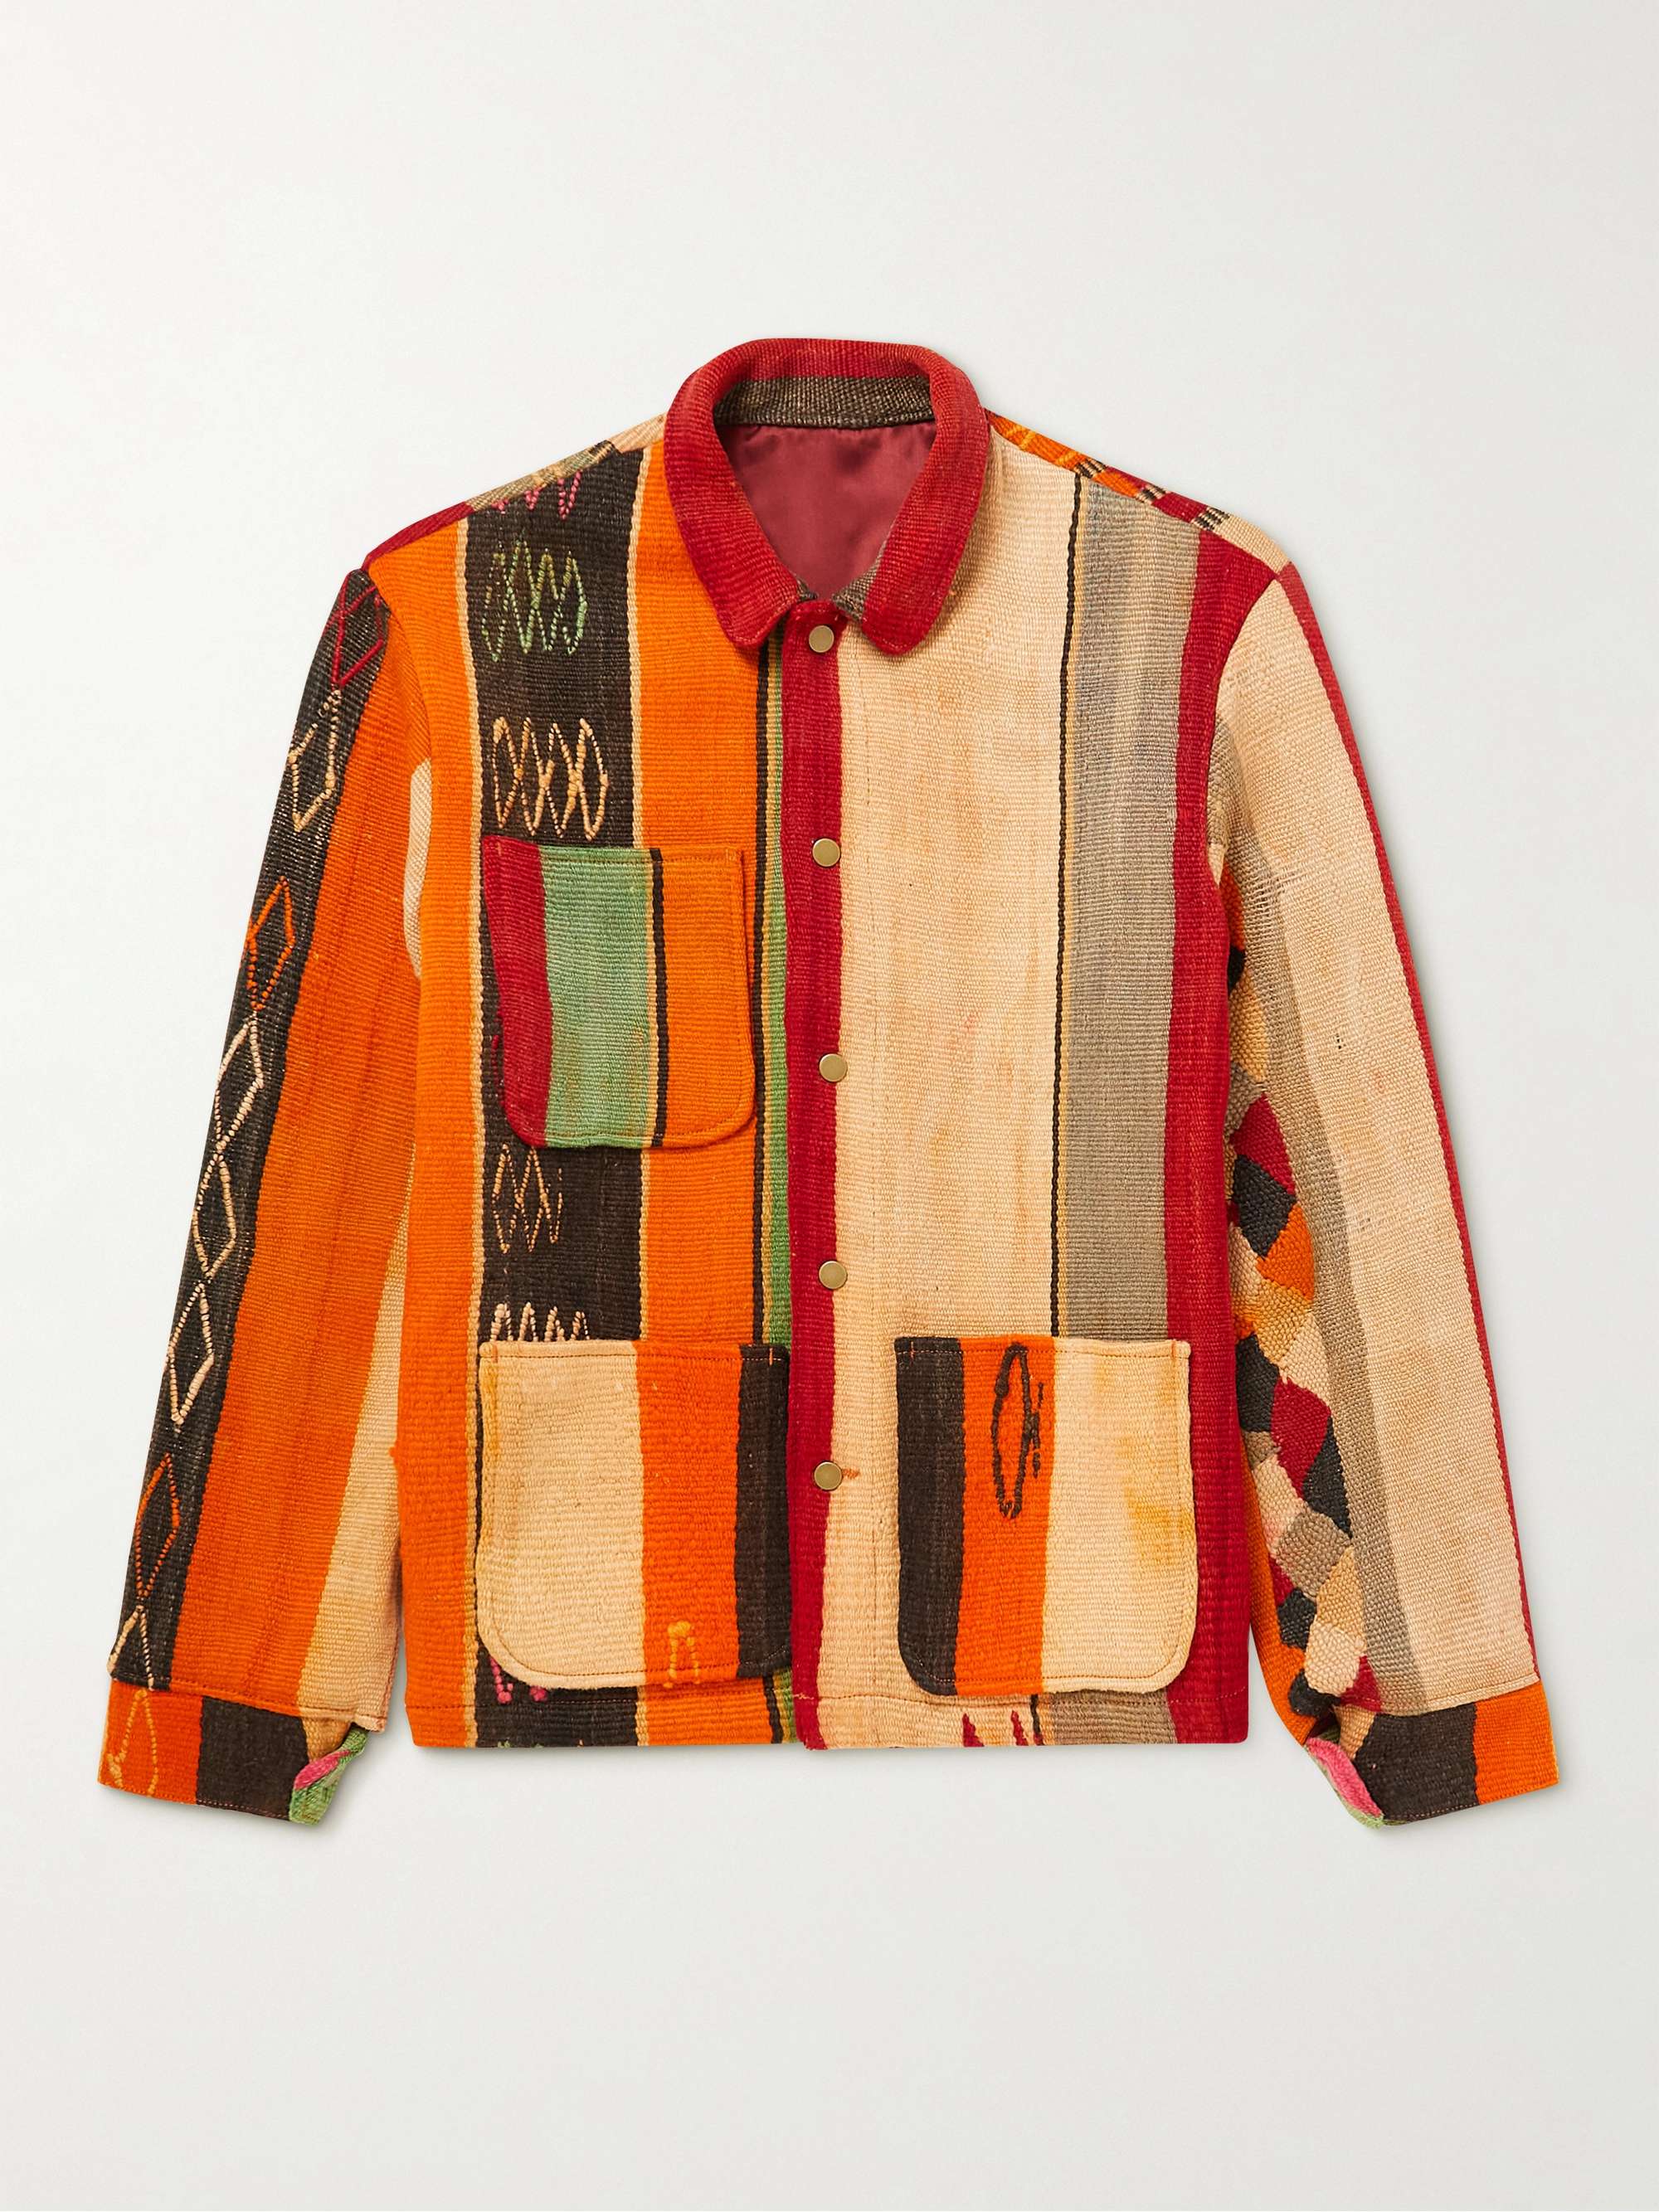 KING KENNEDY RUGS Upcycled Patchwork Wool-Jacquard Chore Jacket